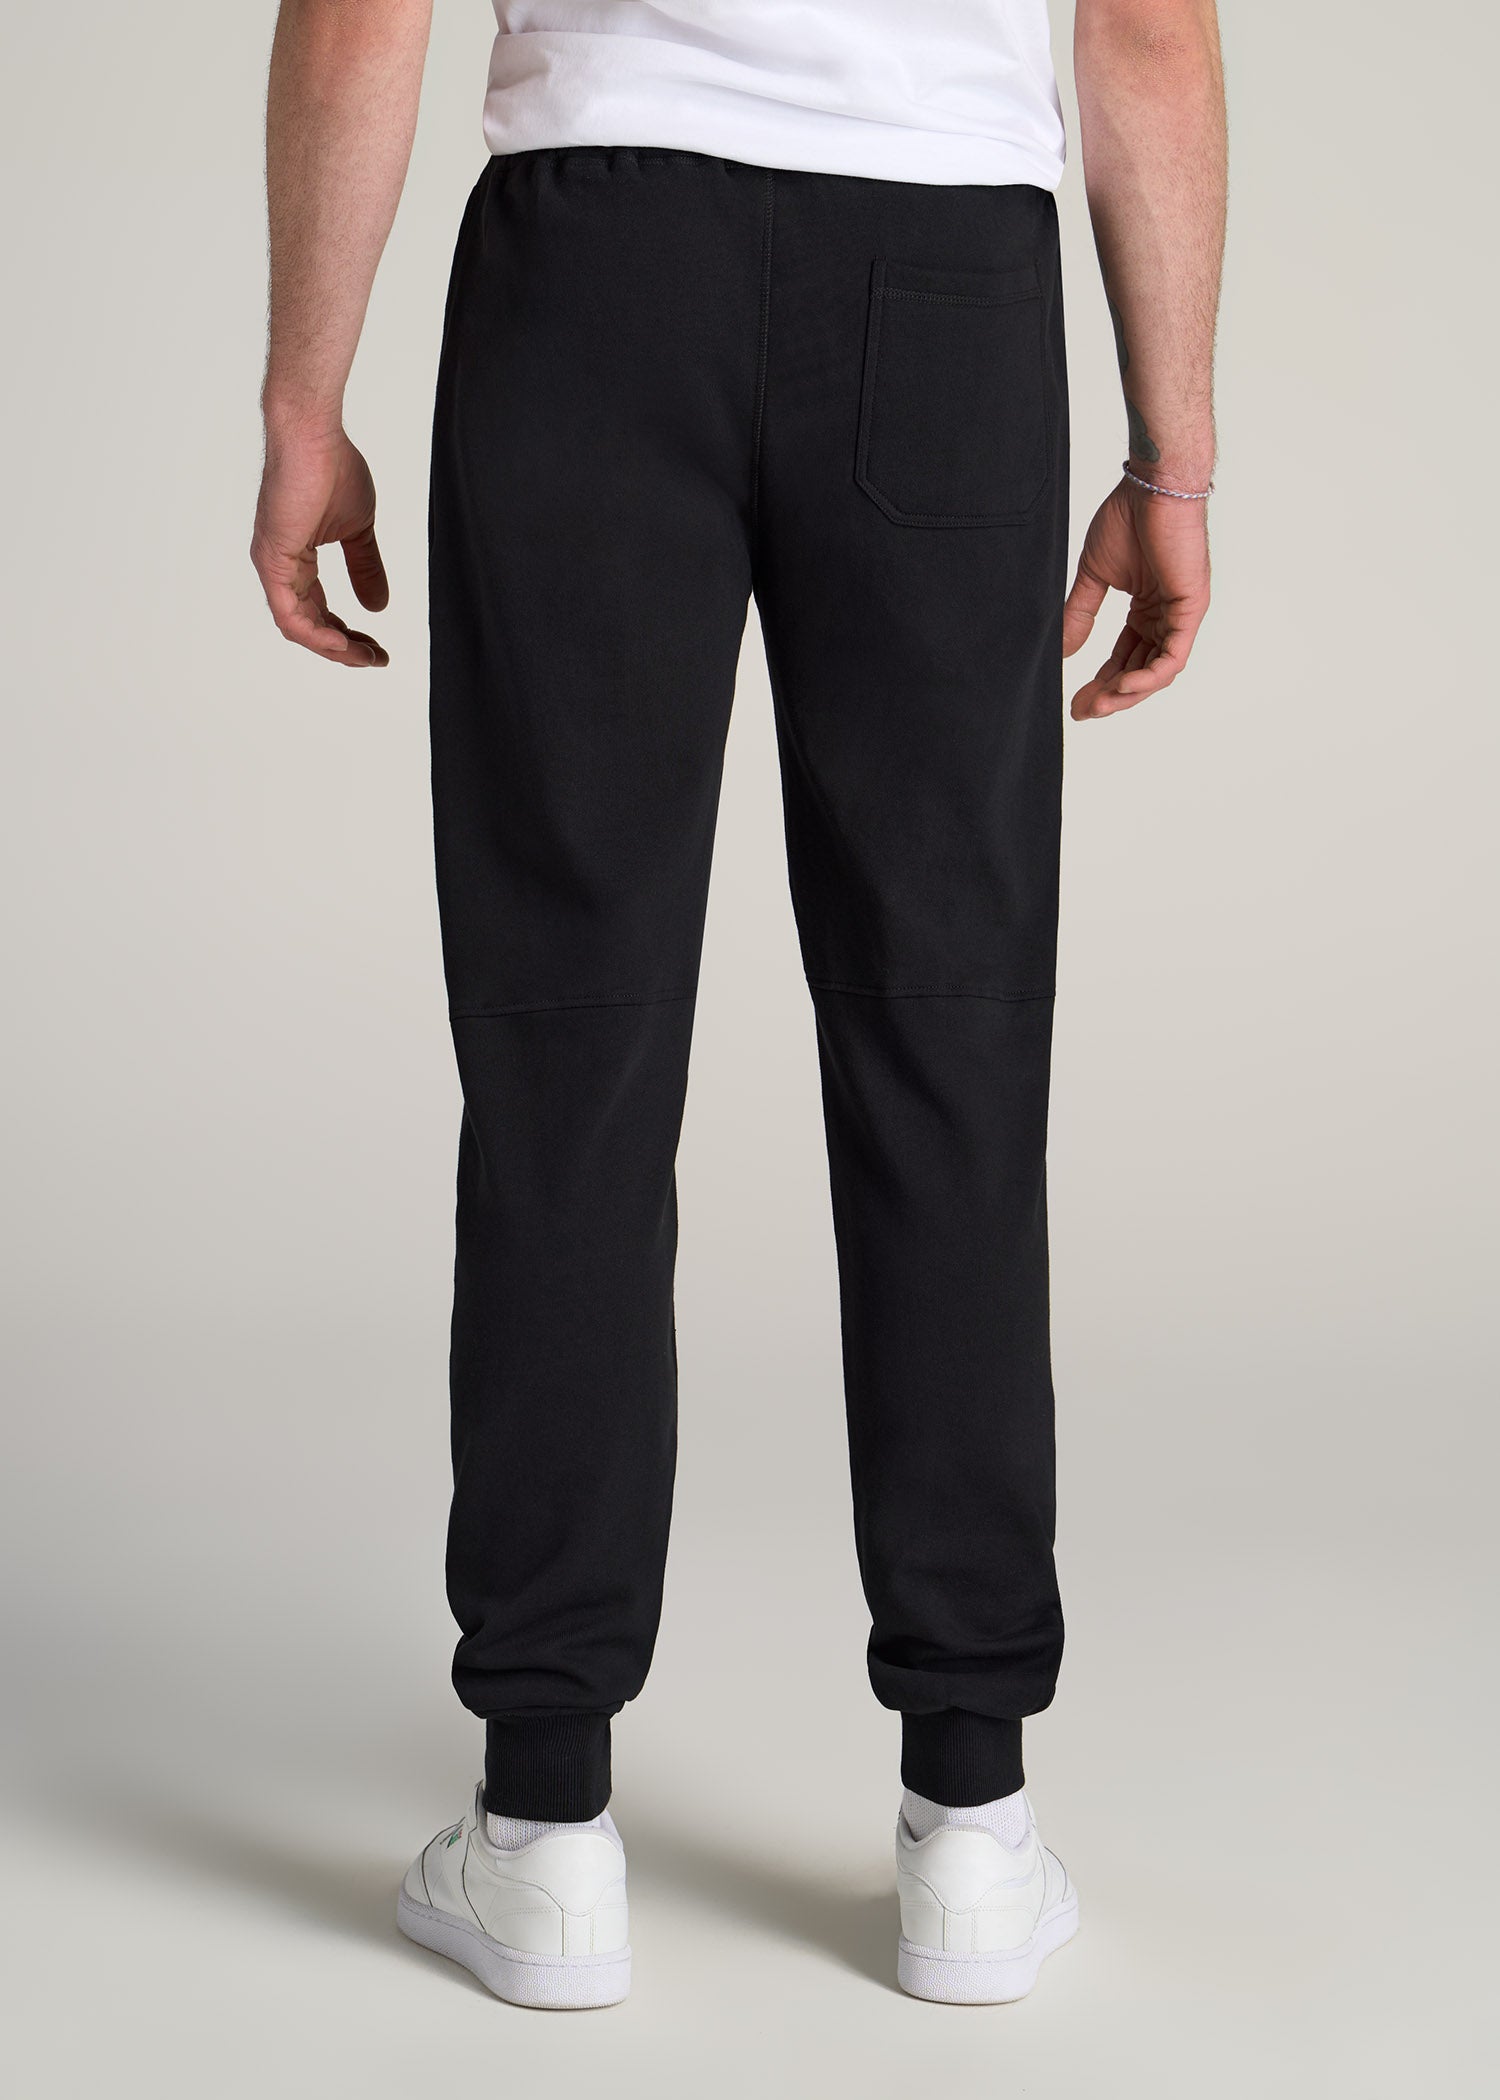 Nike size medium cotton blend dark grey capri sweatpants with pockets